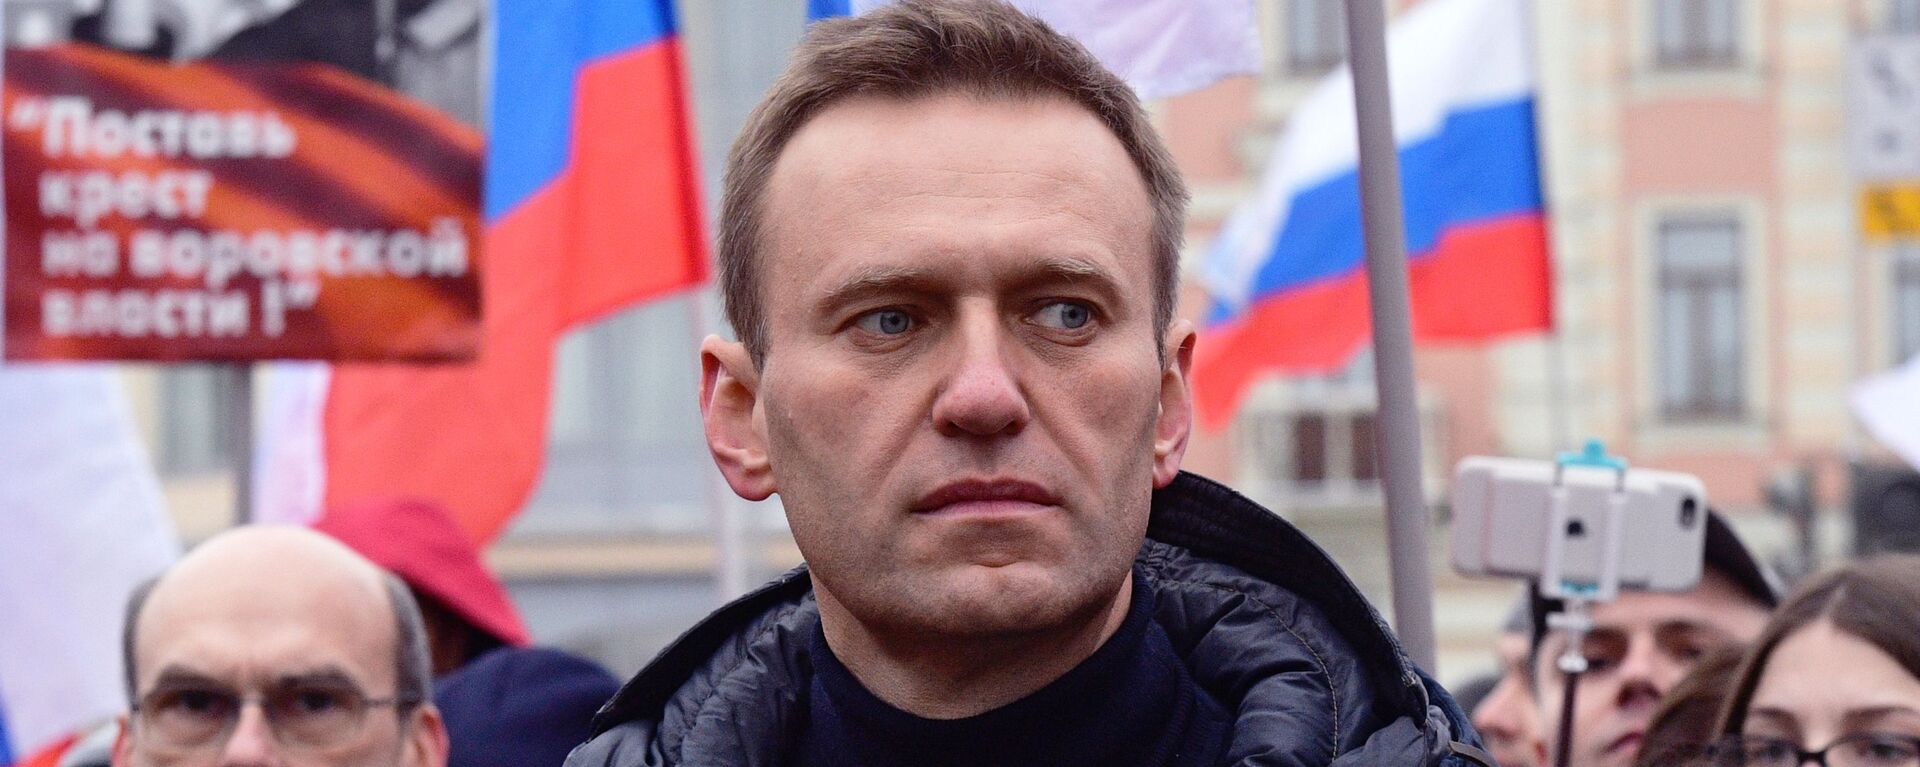 Alexéi Navalni, activista opositor ruso (archivo) - Sputnik Mundo, 1920, 31.01.2021